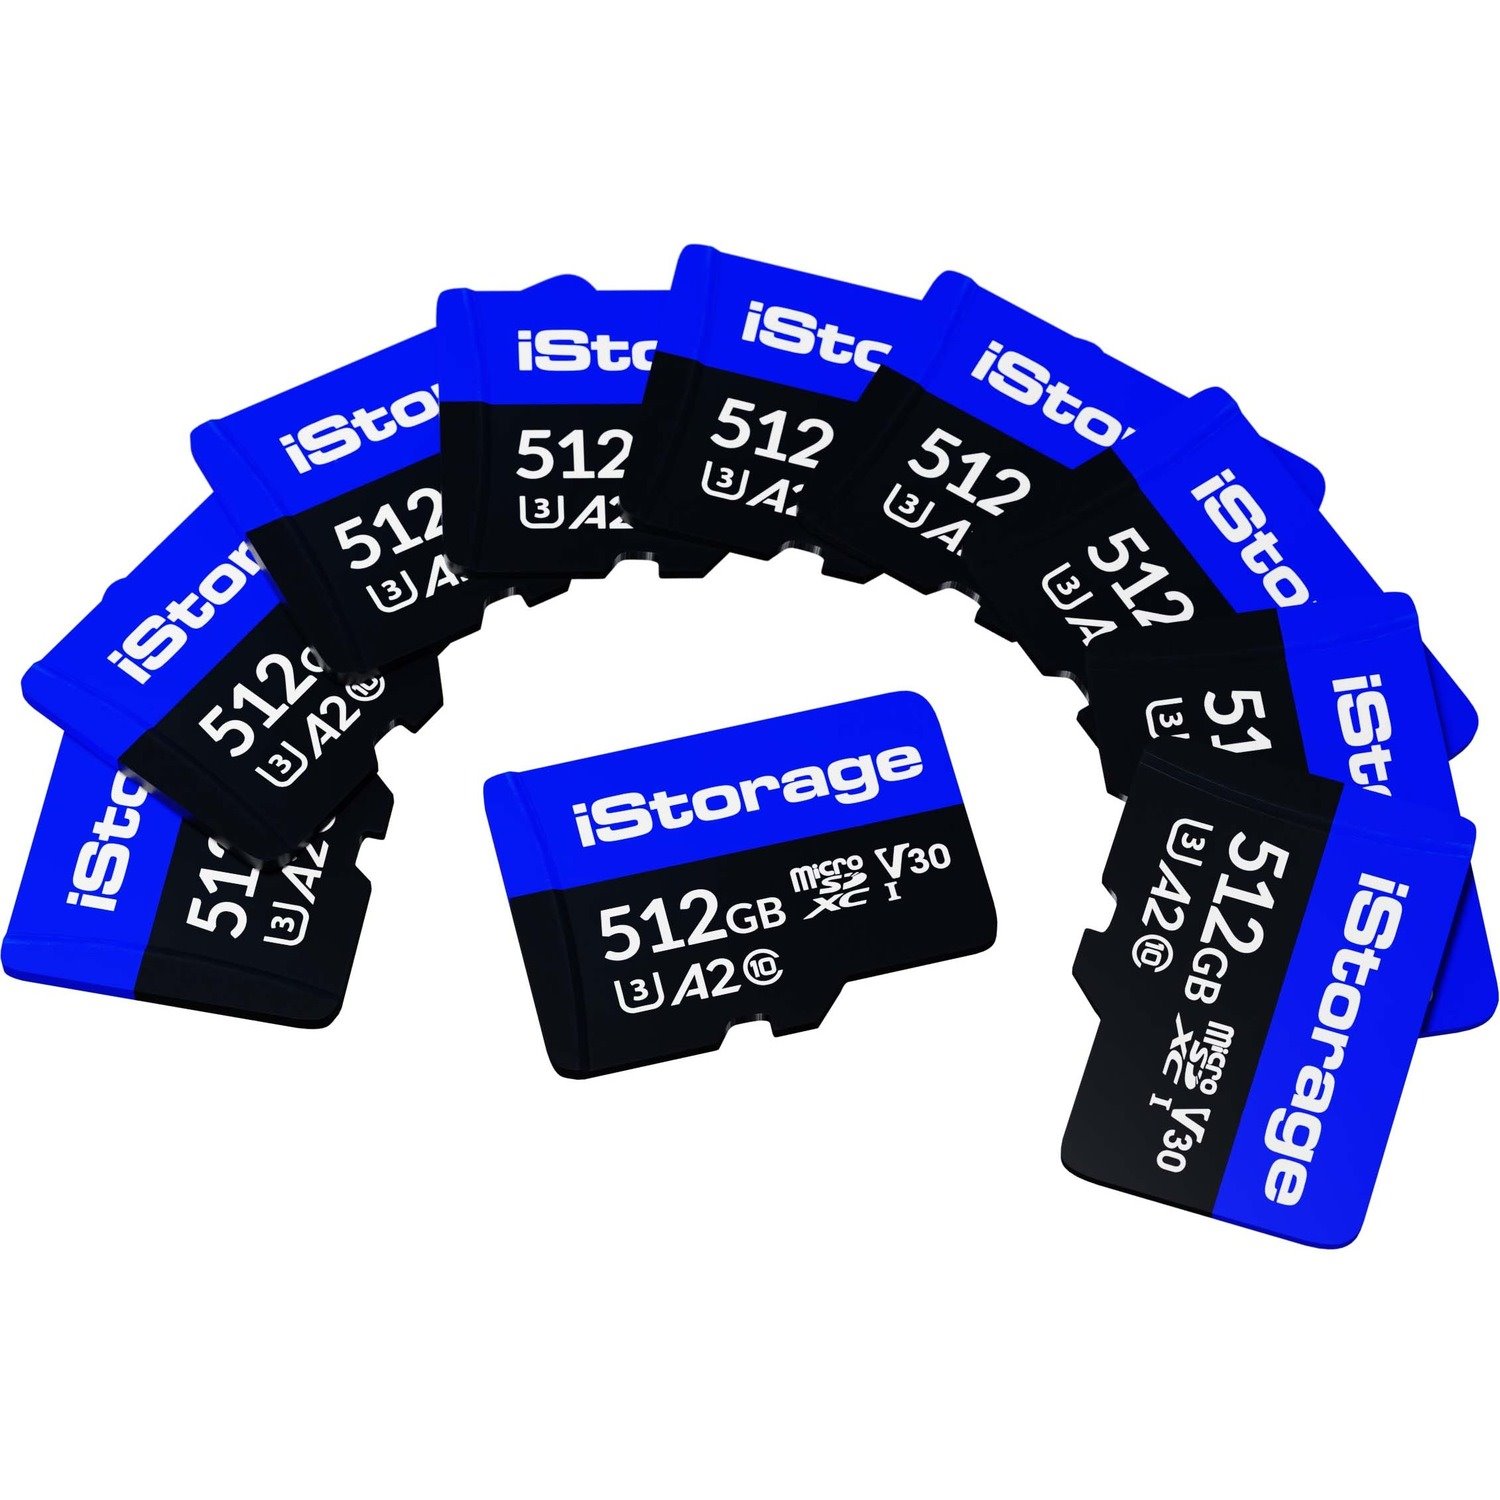 iStorage 512 GB microSDXC - 10 Pack